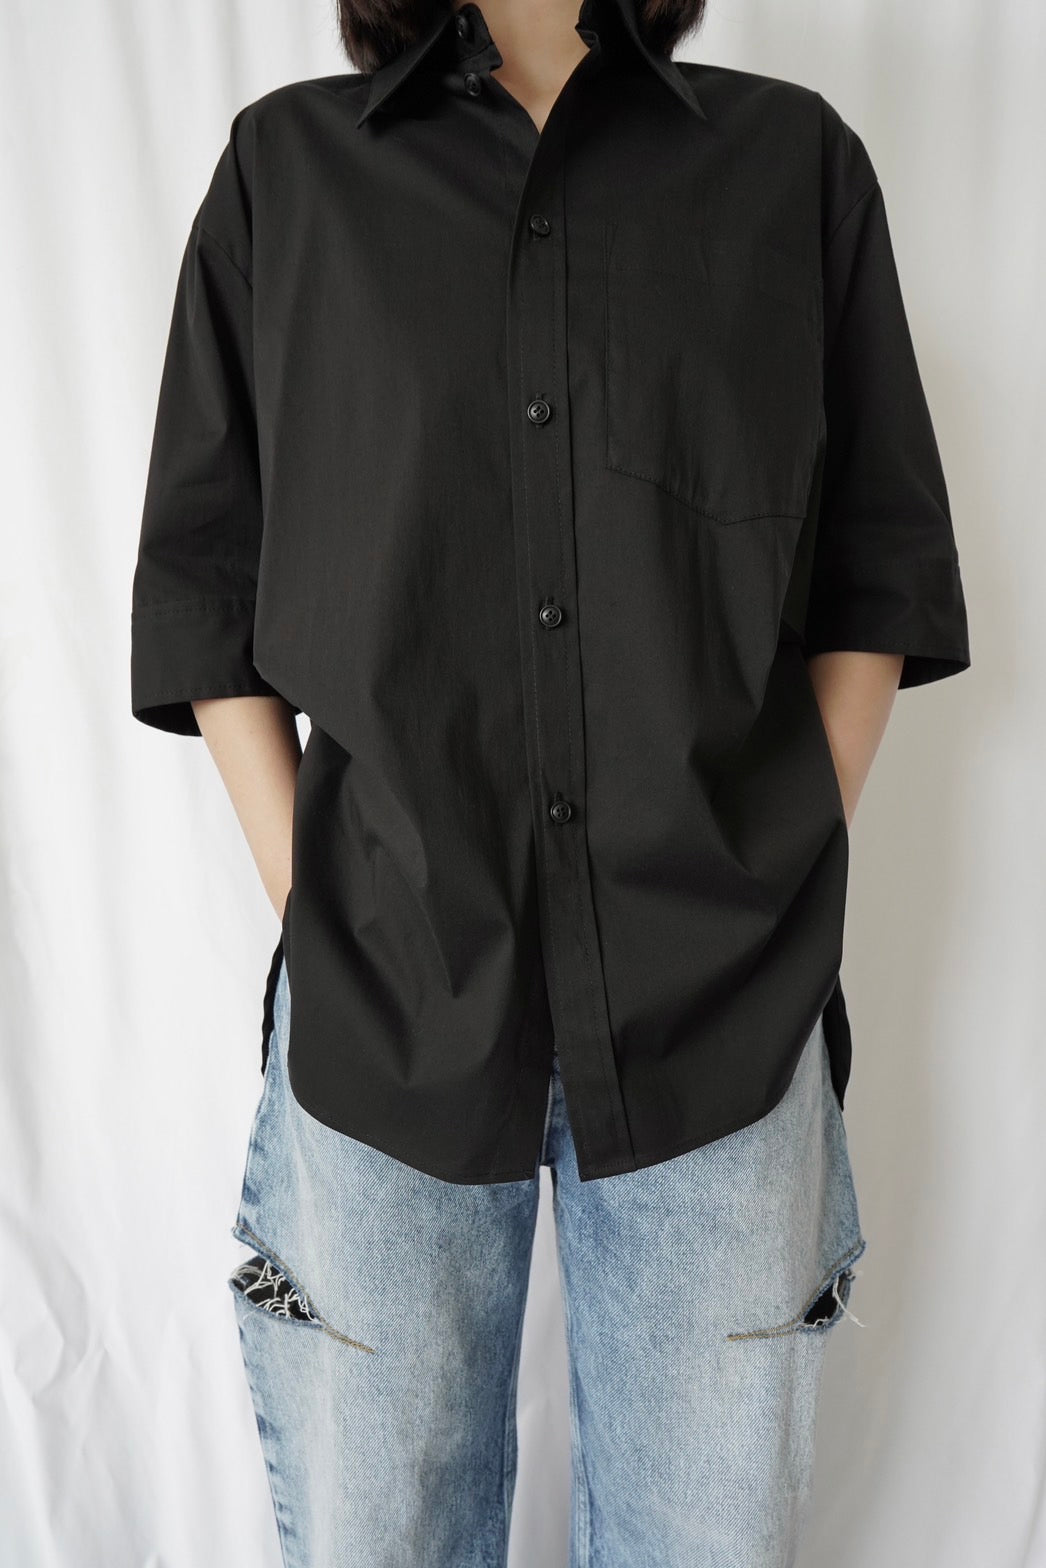 Half Sleeve Big Shirt - BLACK